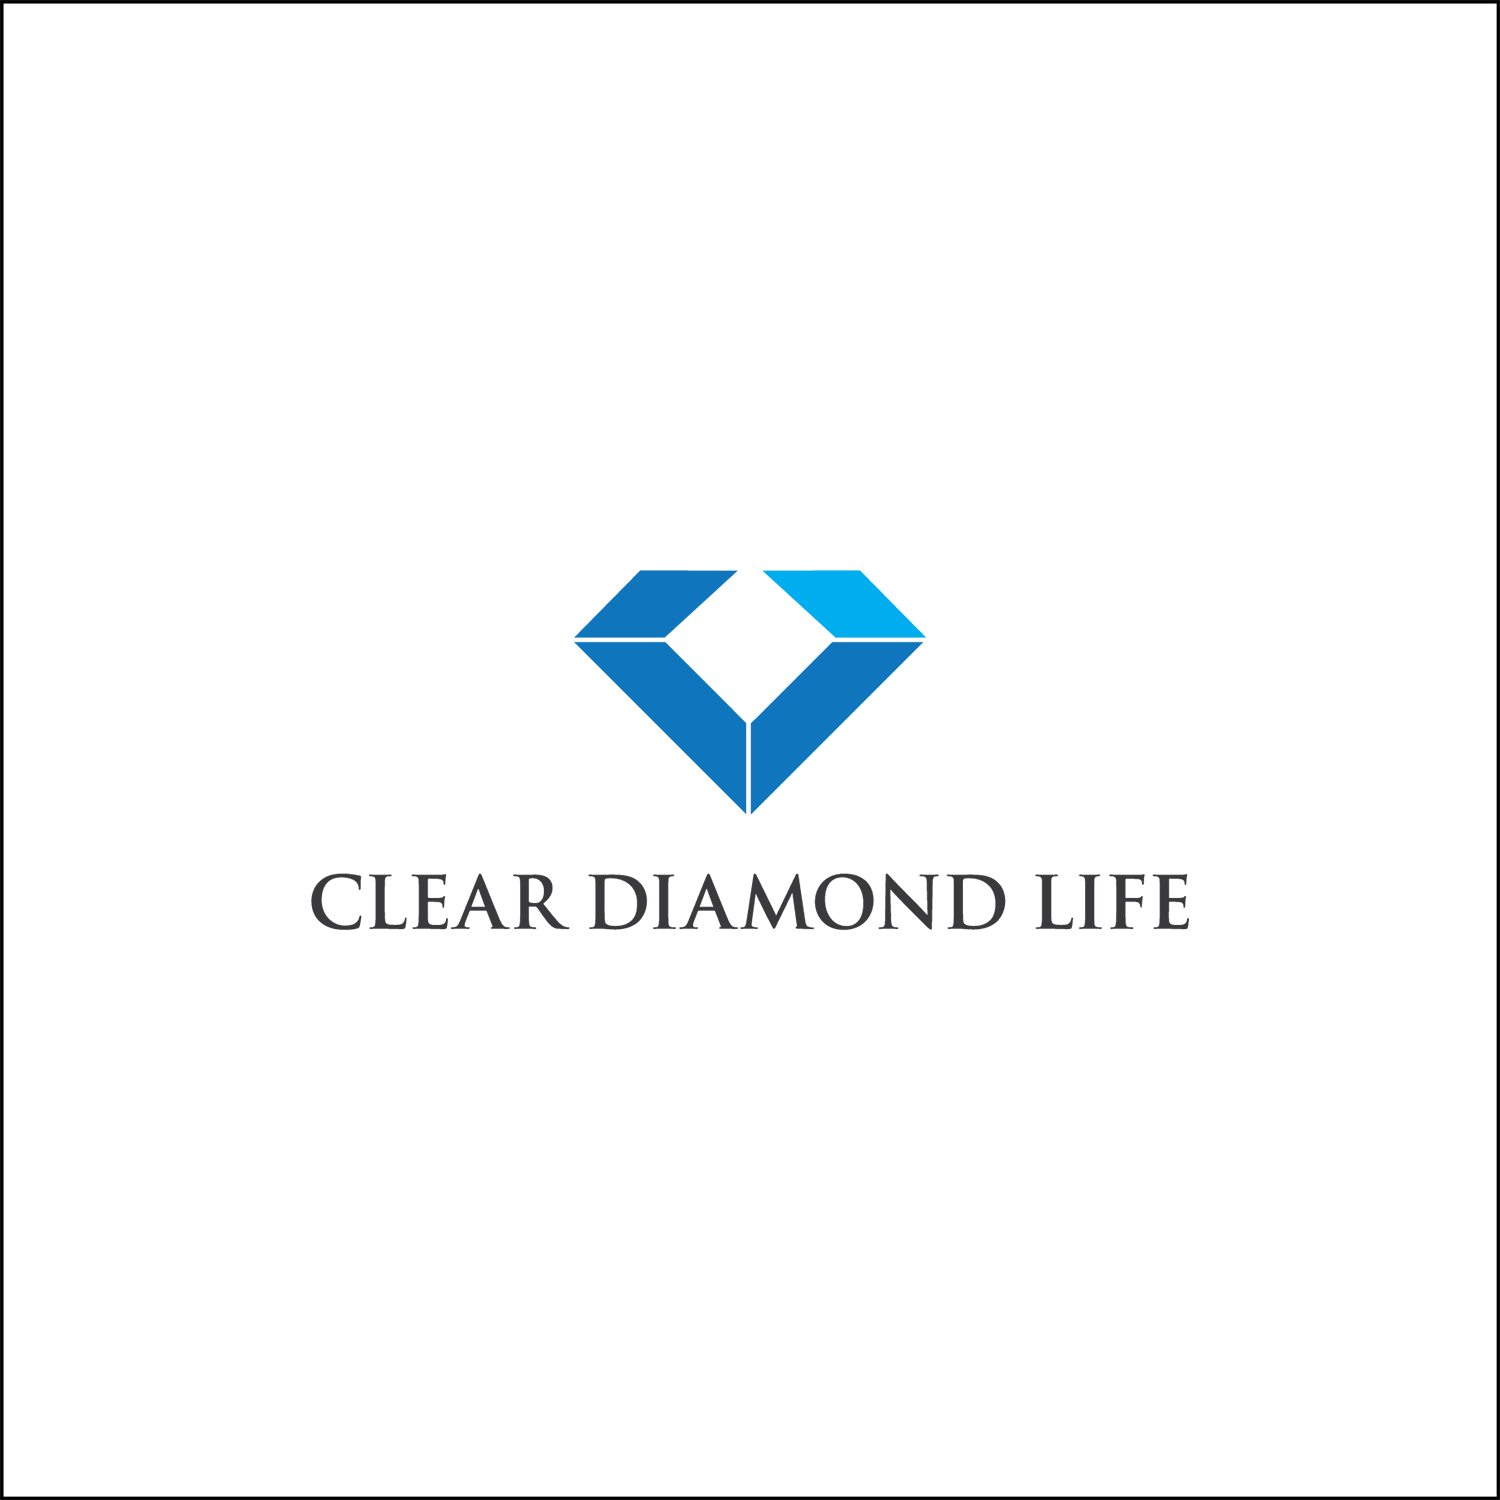 Diamond Sign for Life Logo - Serious, Modern, Financial Planning Logo Design for Clear Diamond ...